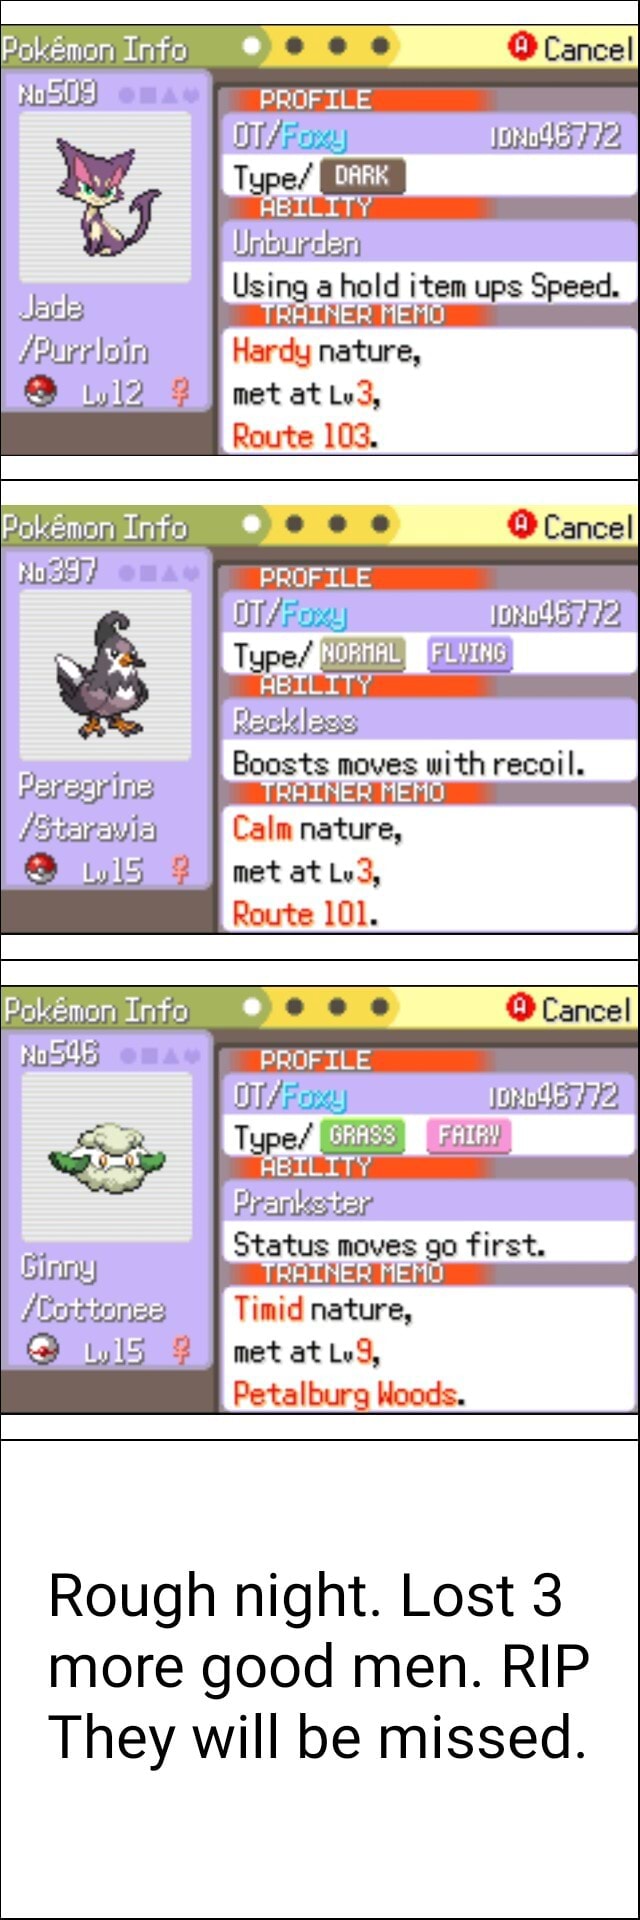 Natures - Pokémon 101 - Advanced Trainer Info